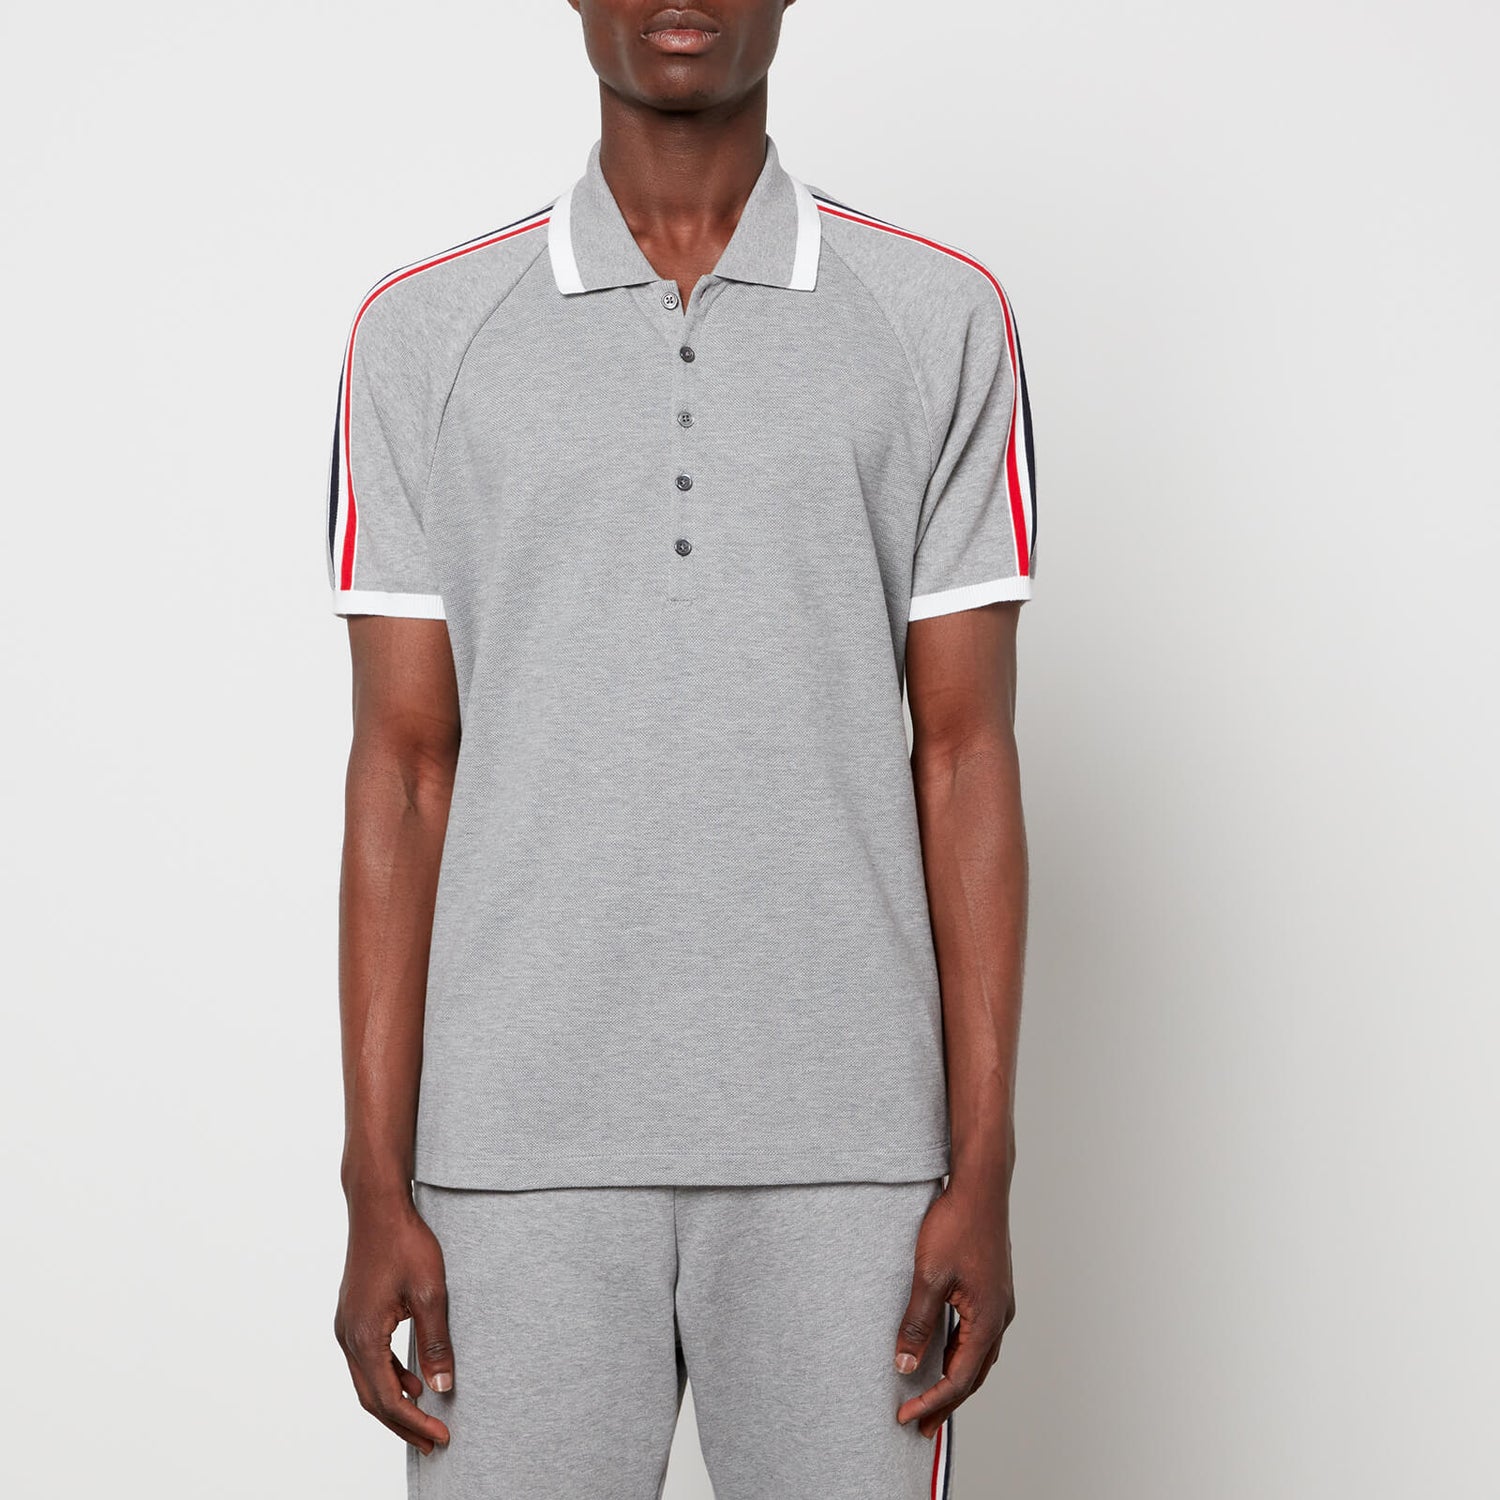 Thom Browne Men's Raglan Sleeve Polo Shirt - Light Grey - 2/M